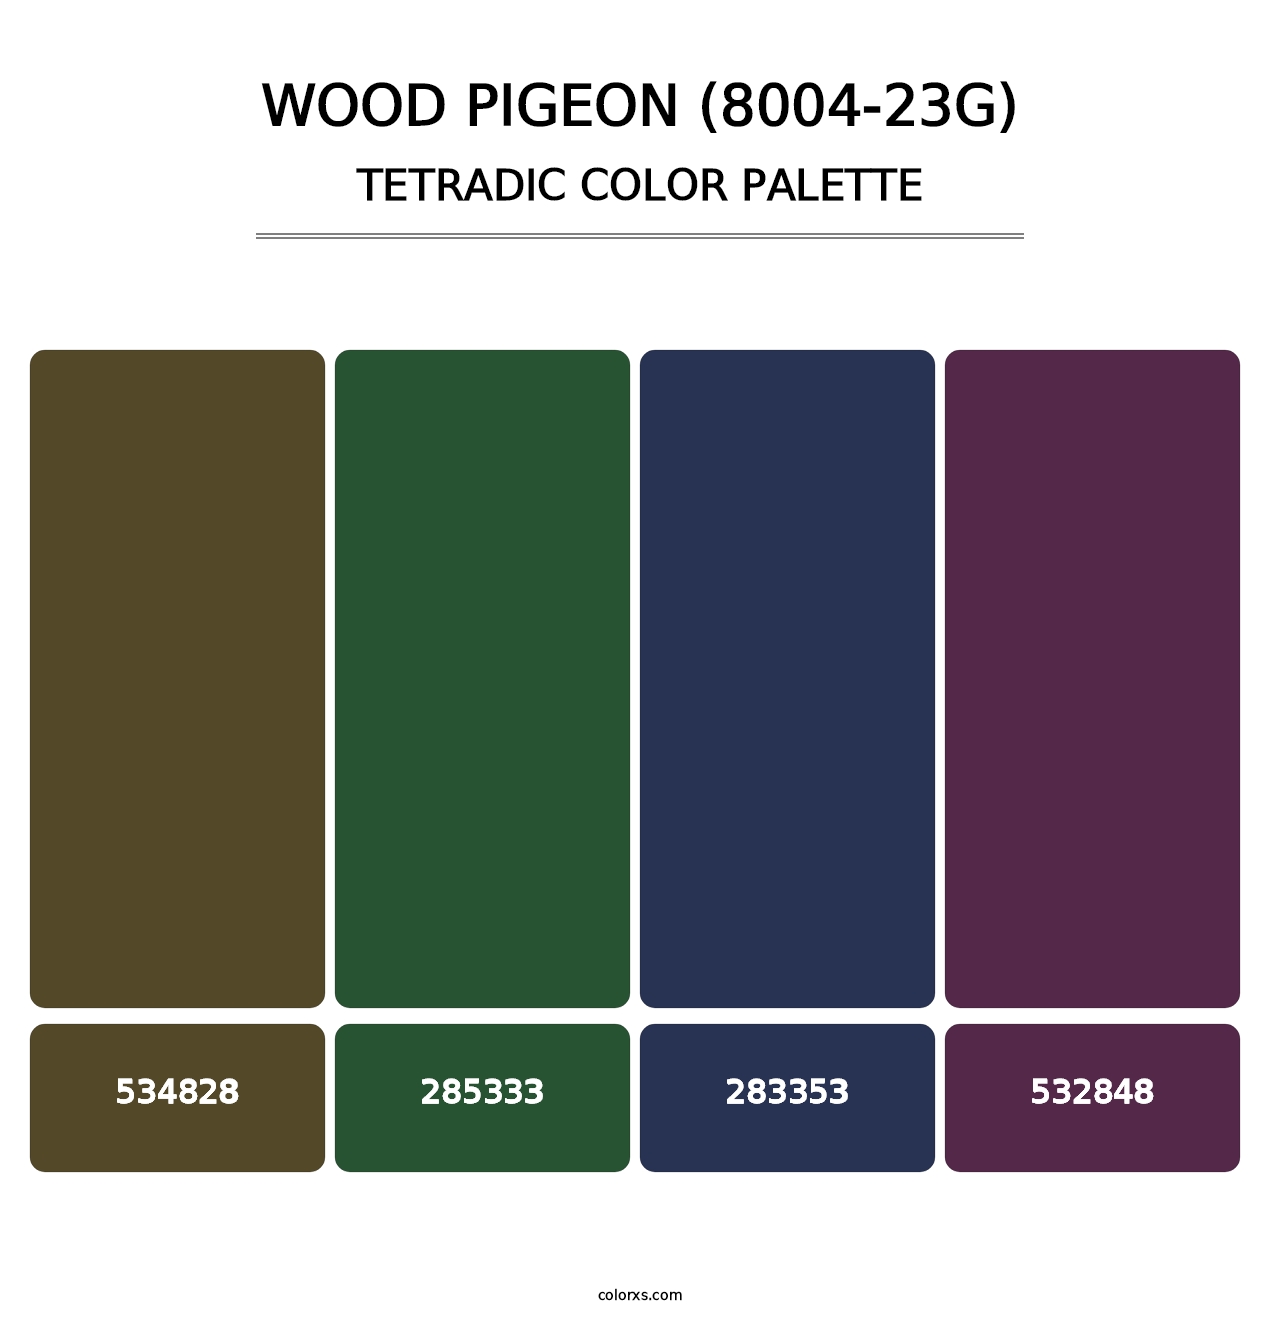 Wood Pigeon (8004-23G) - Tetradic Color Palette